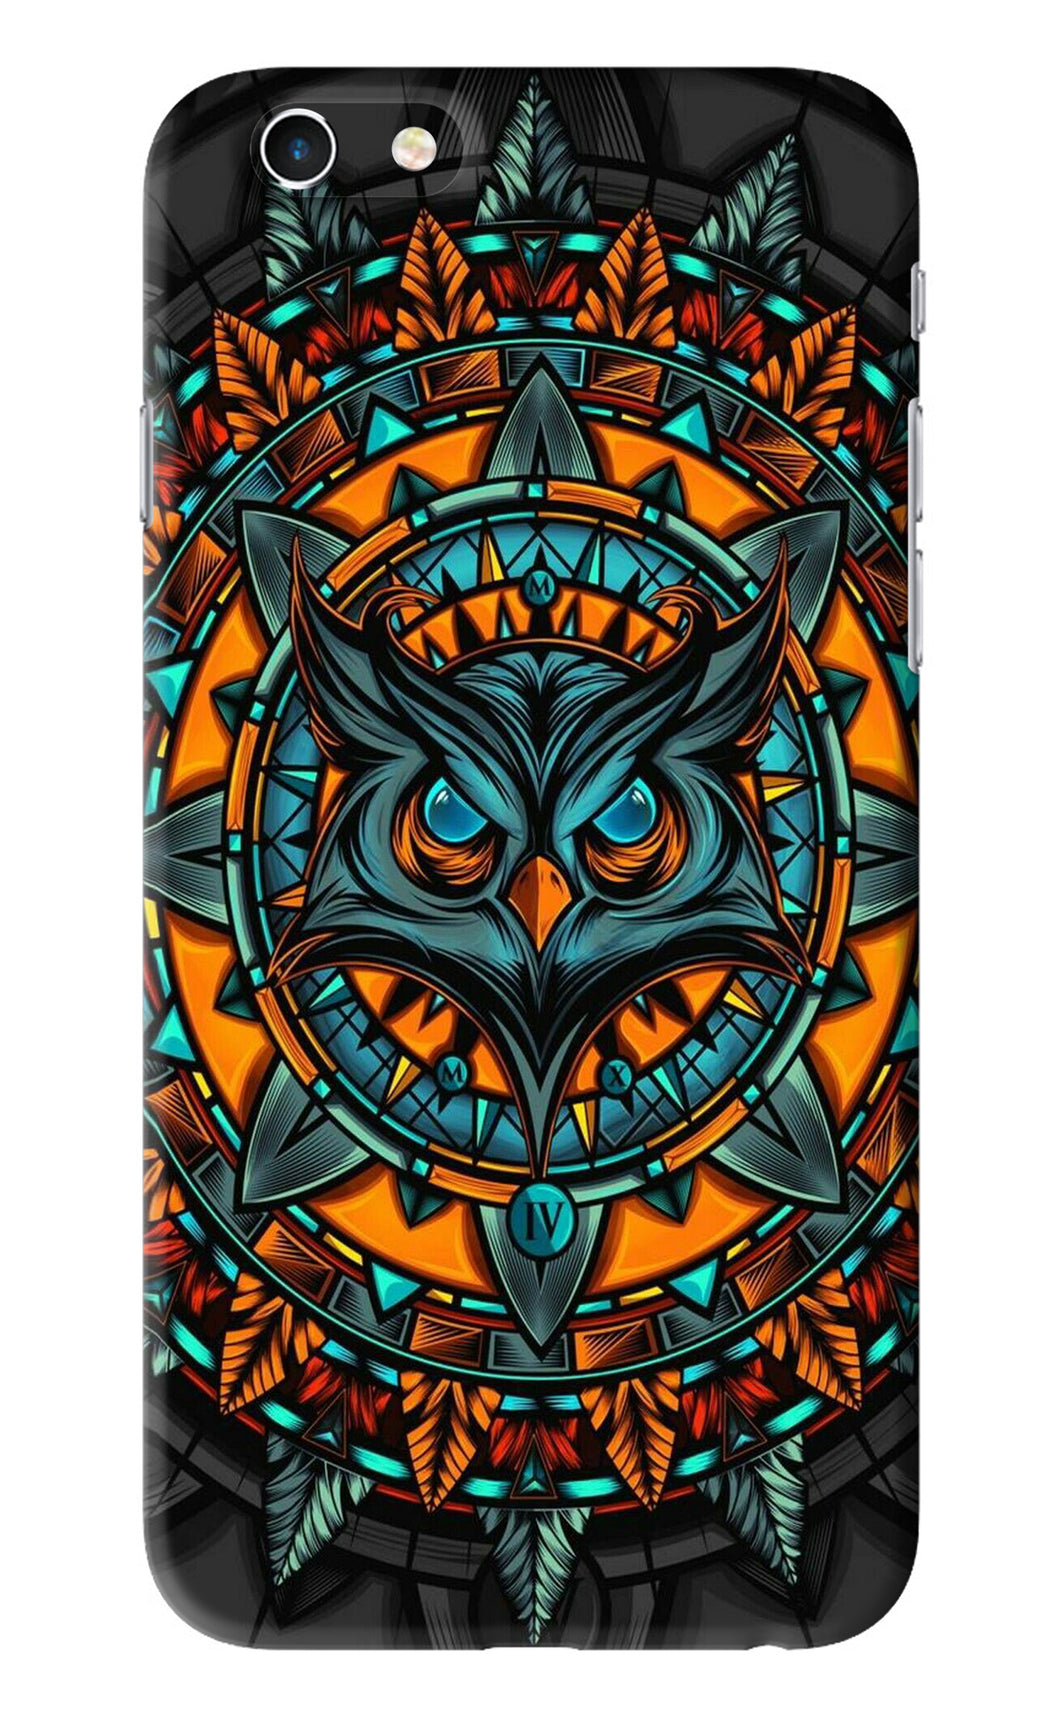 Angry Owl Art iPhone 6 Back Skin Wrap